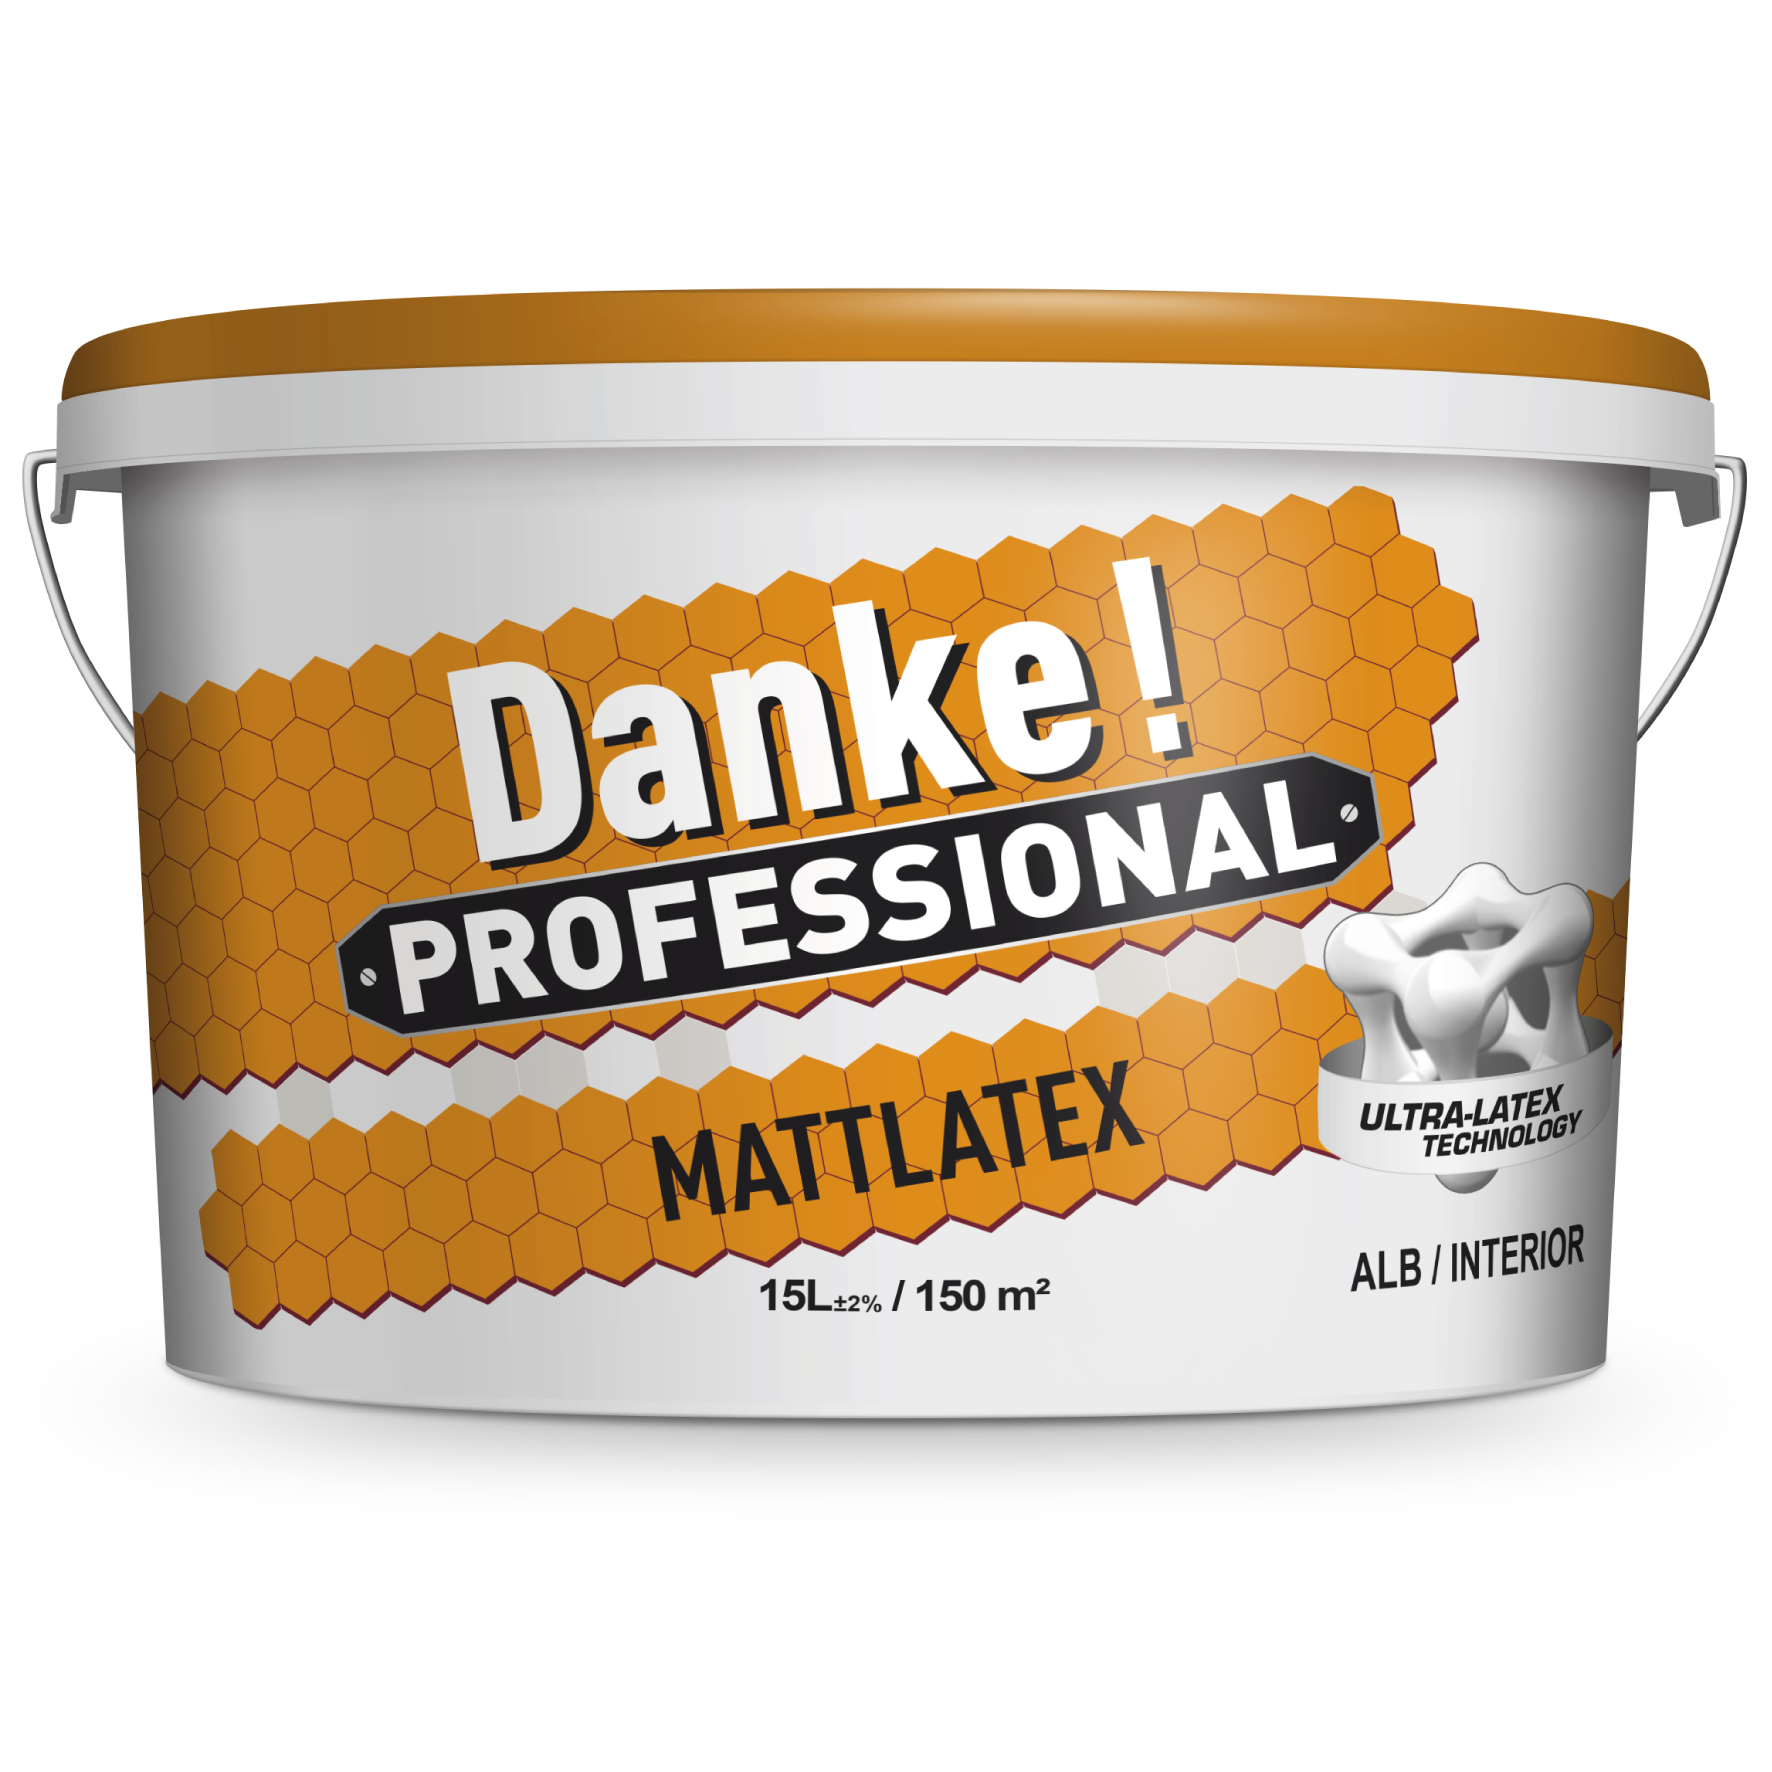 Danke! Professional Mattlatex